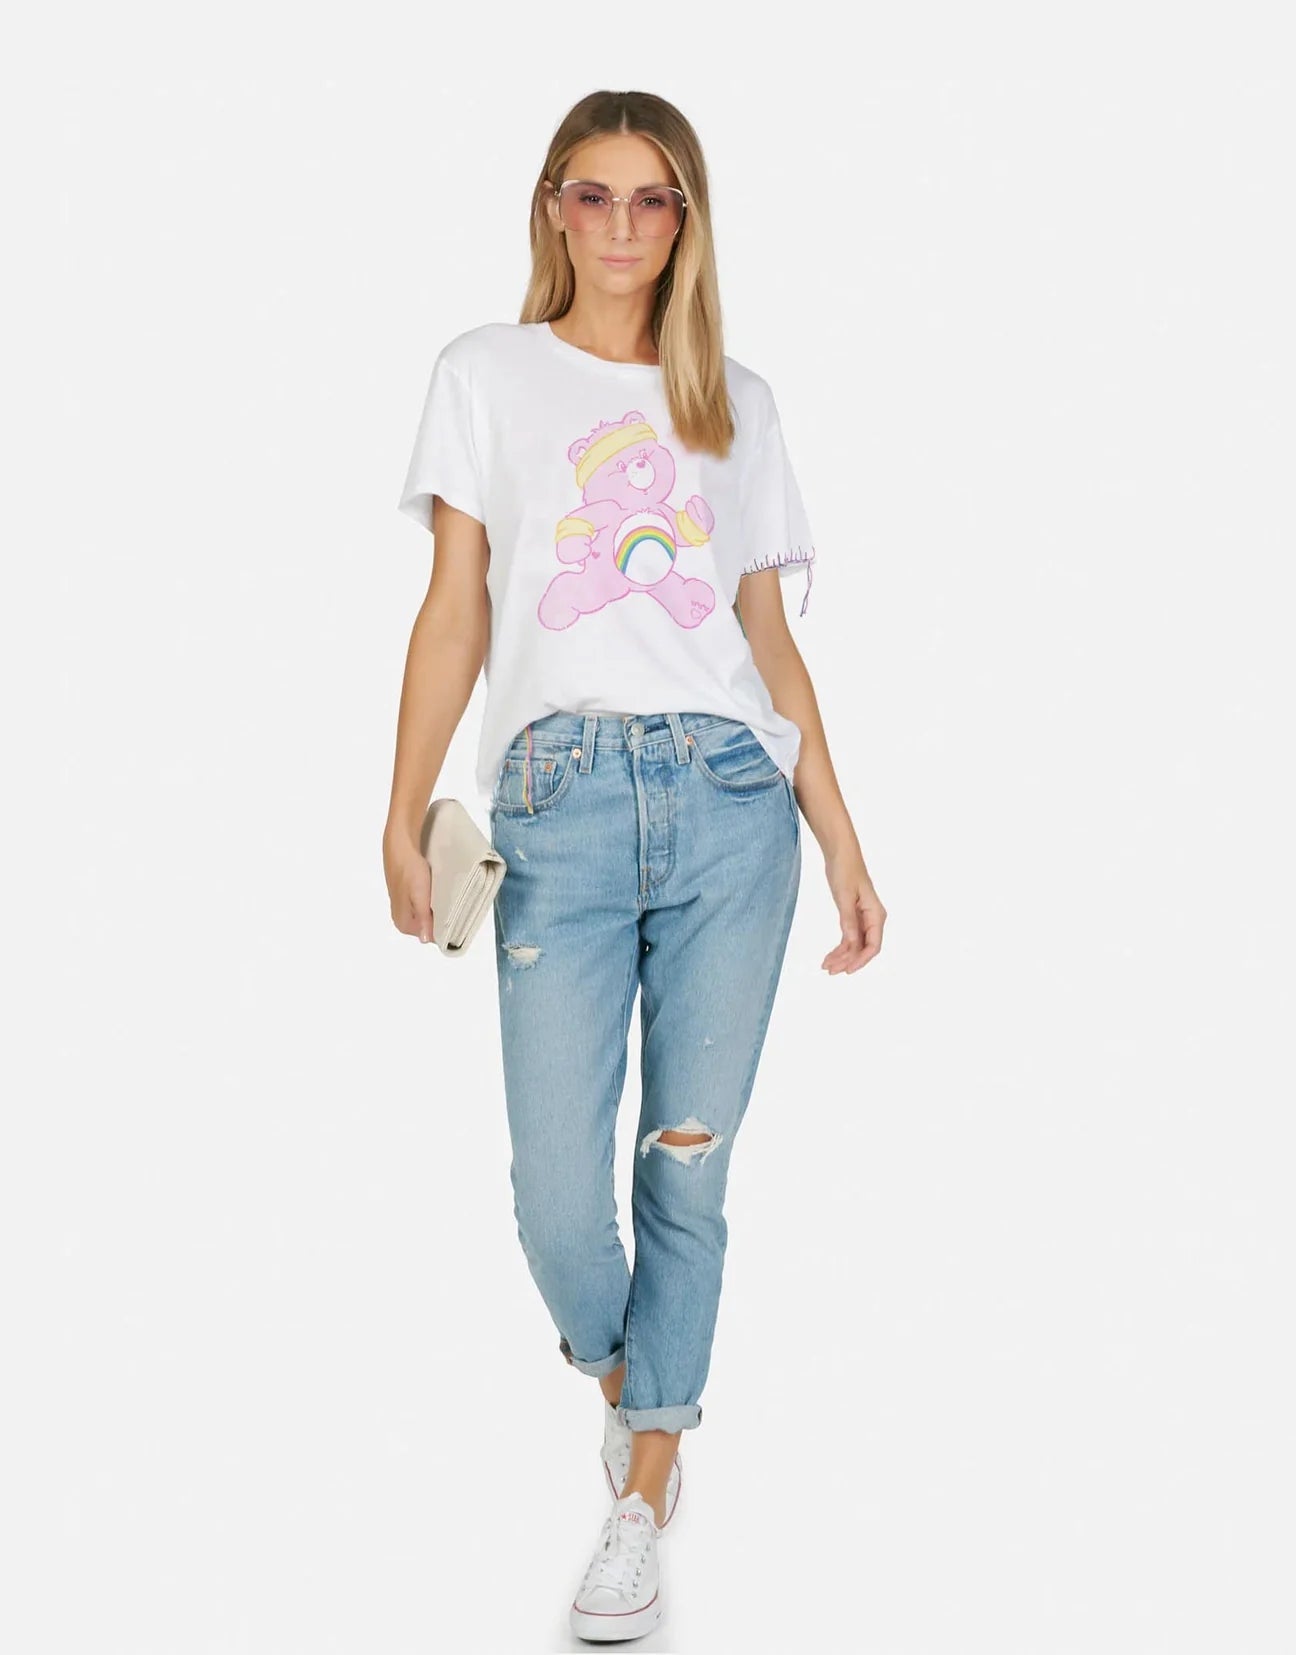 Shop Lauren Moshi Croft X Care Bears T-Shirt - Premium T-Shirt from Lauren Moshi Online now at Spoiled Brat 